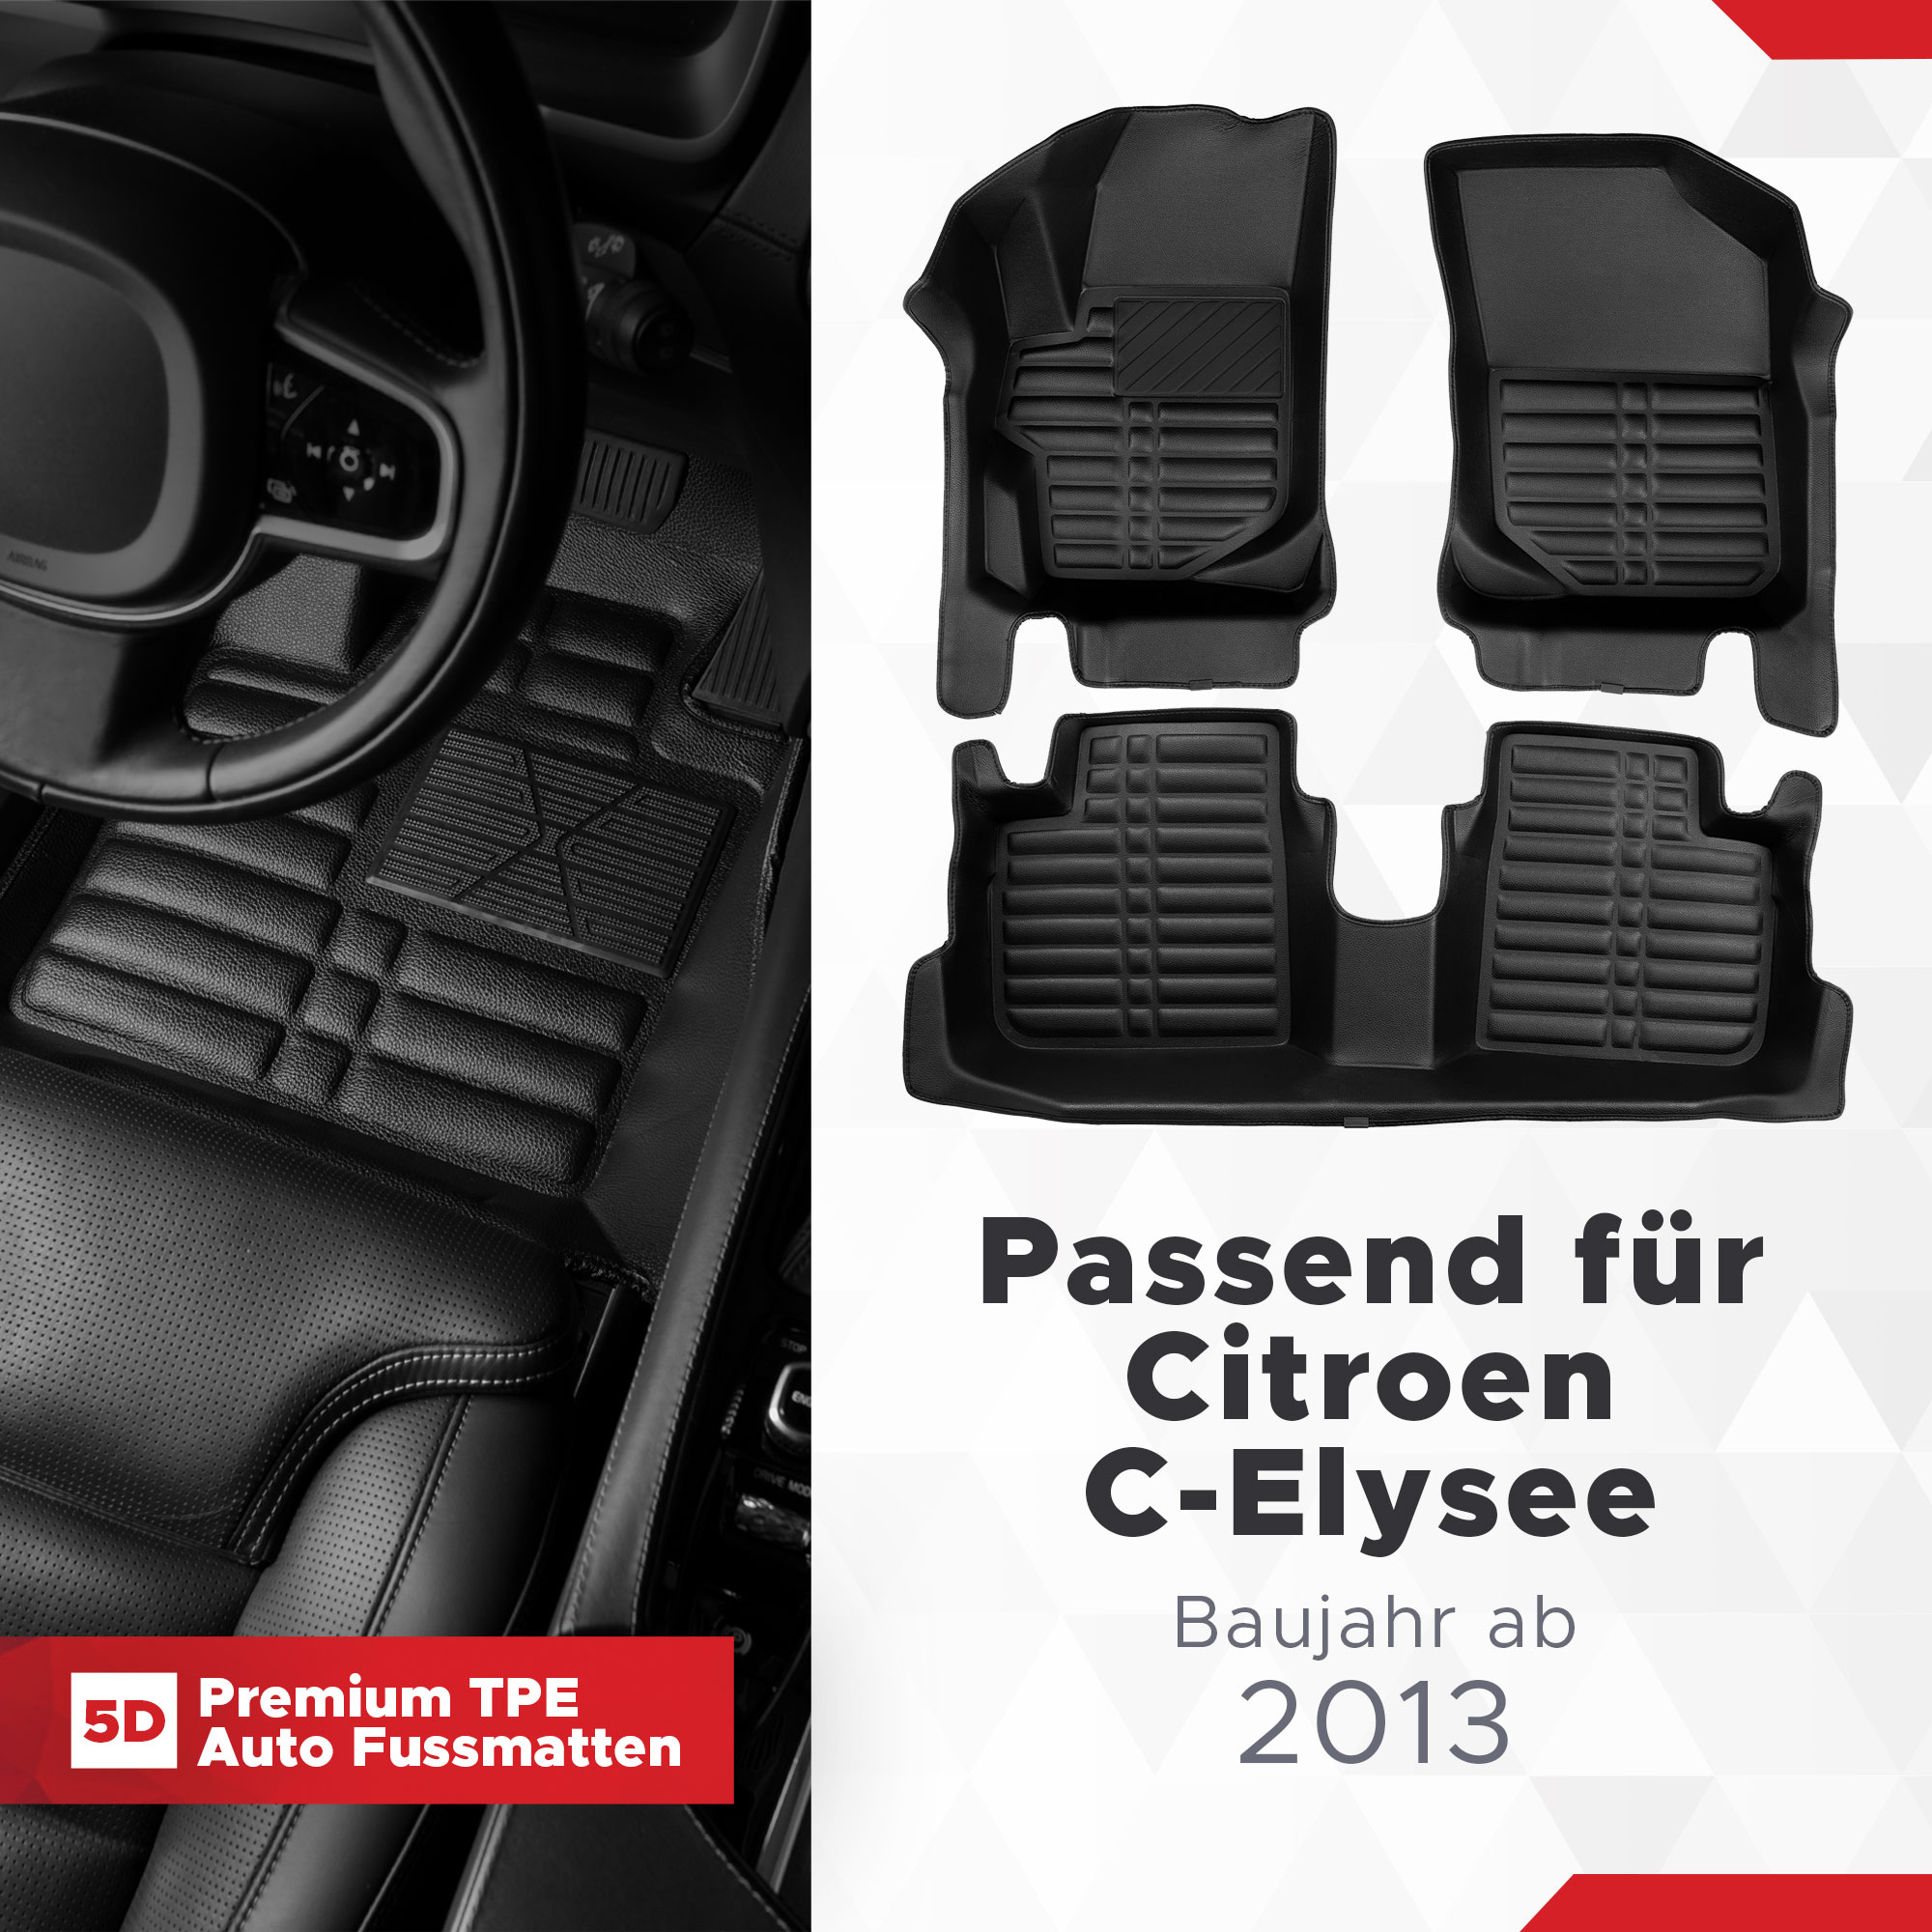 5D Premium Auto Fussmatten TPE Set passend für Citroen C-Elysee